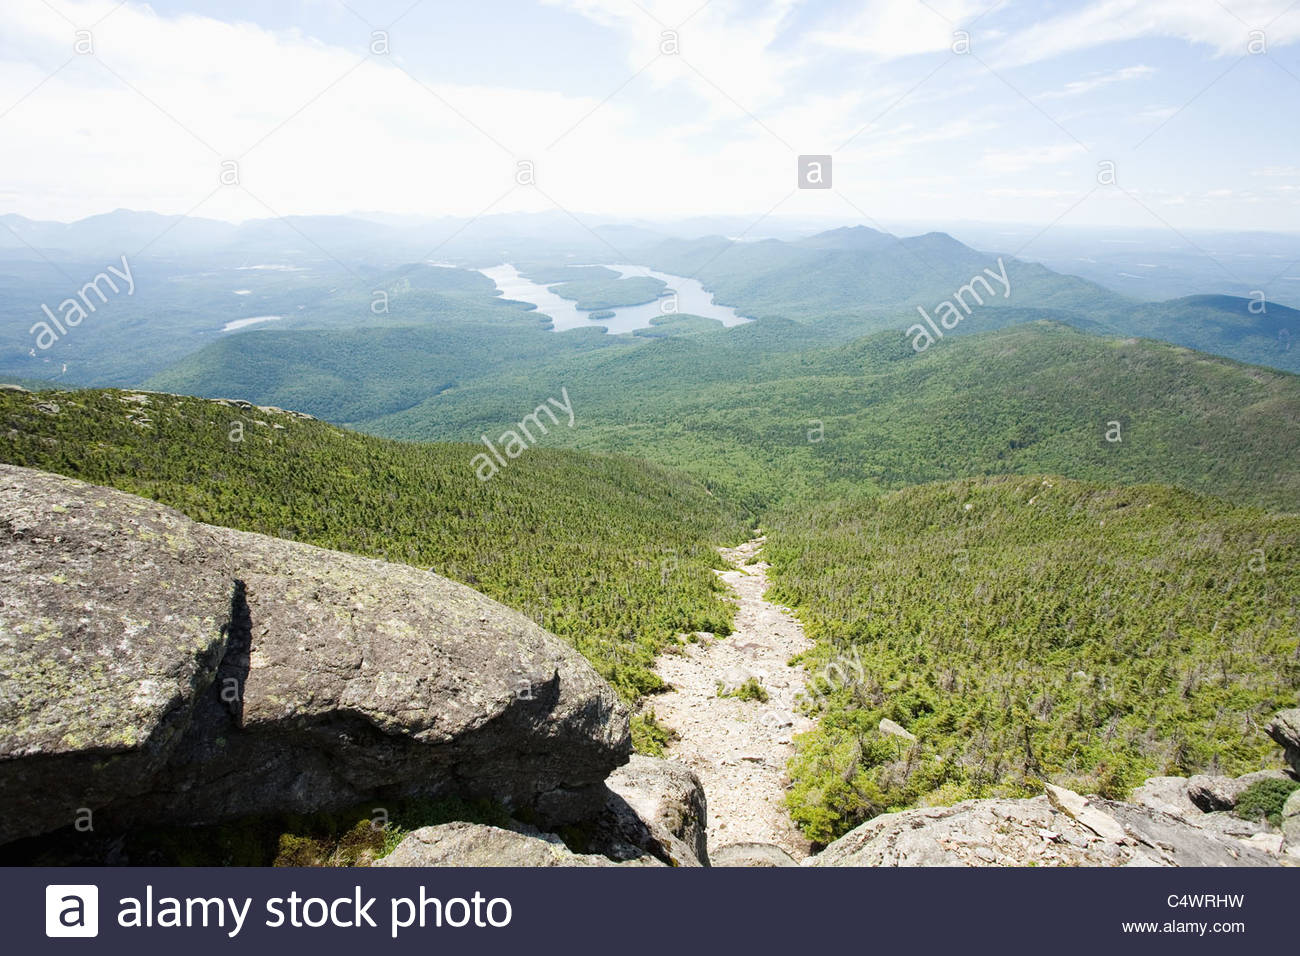 Usa New York State Of Adirondack Mountains With Lake Placid